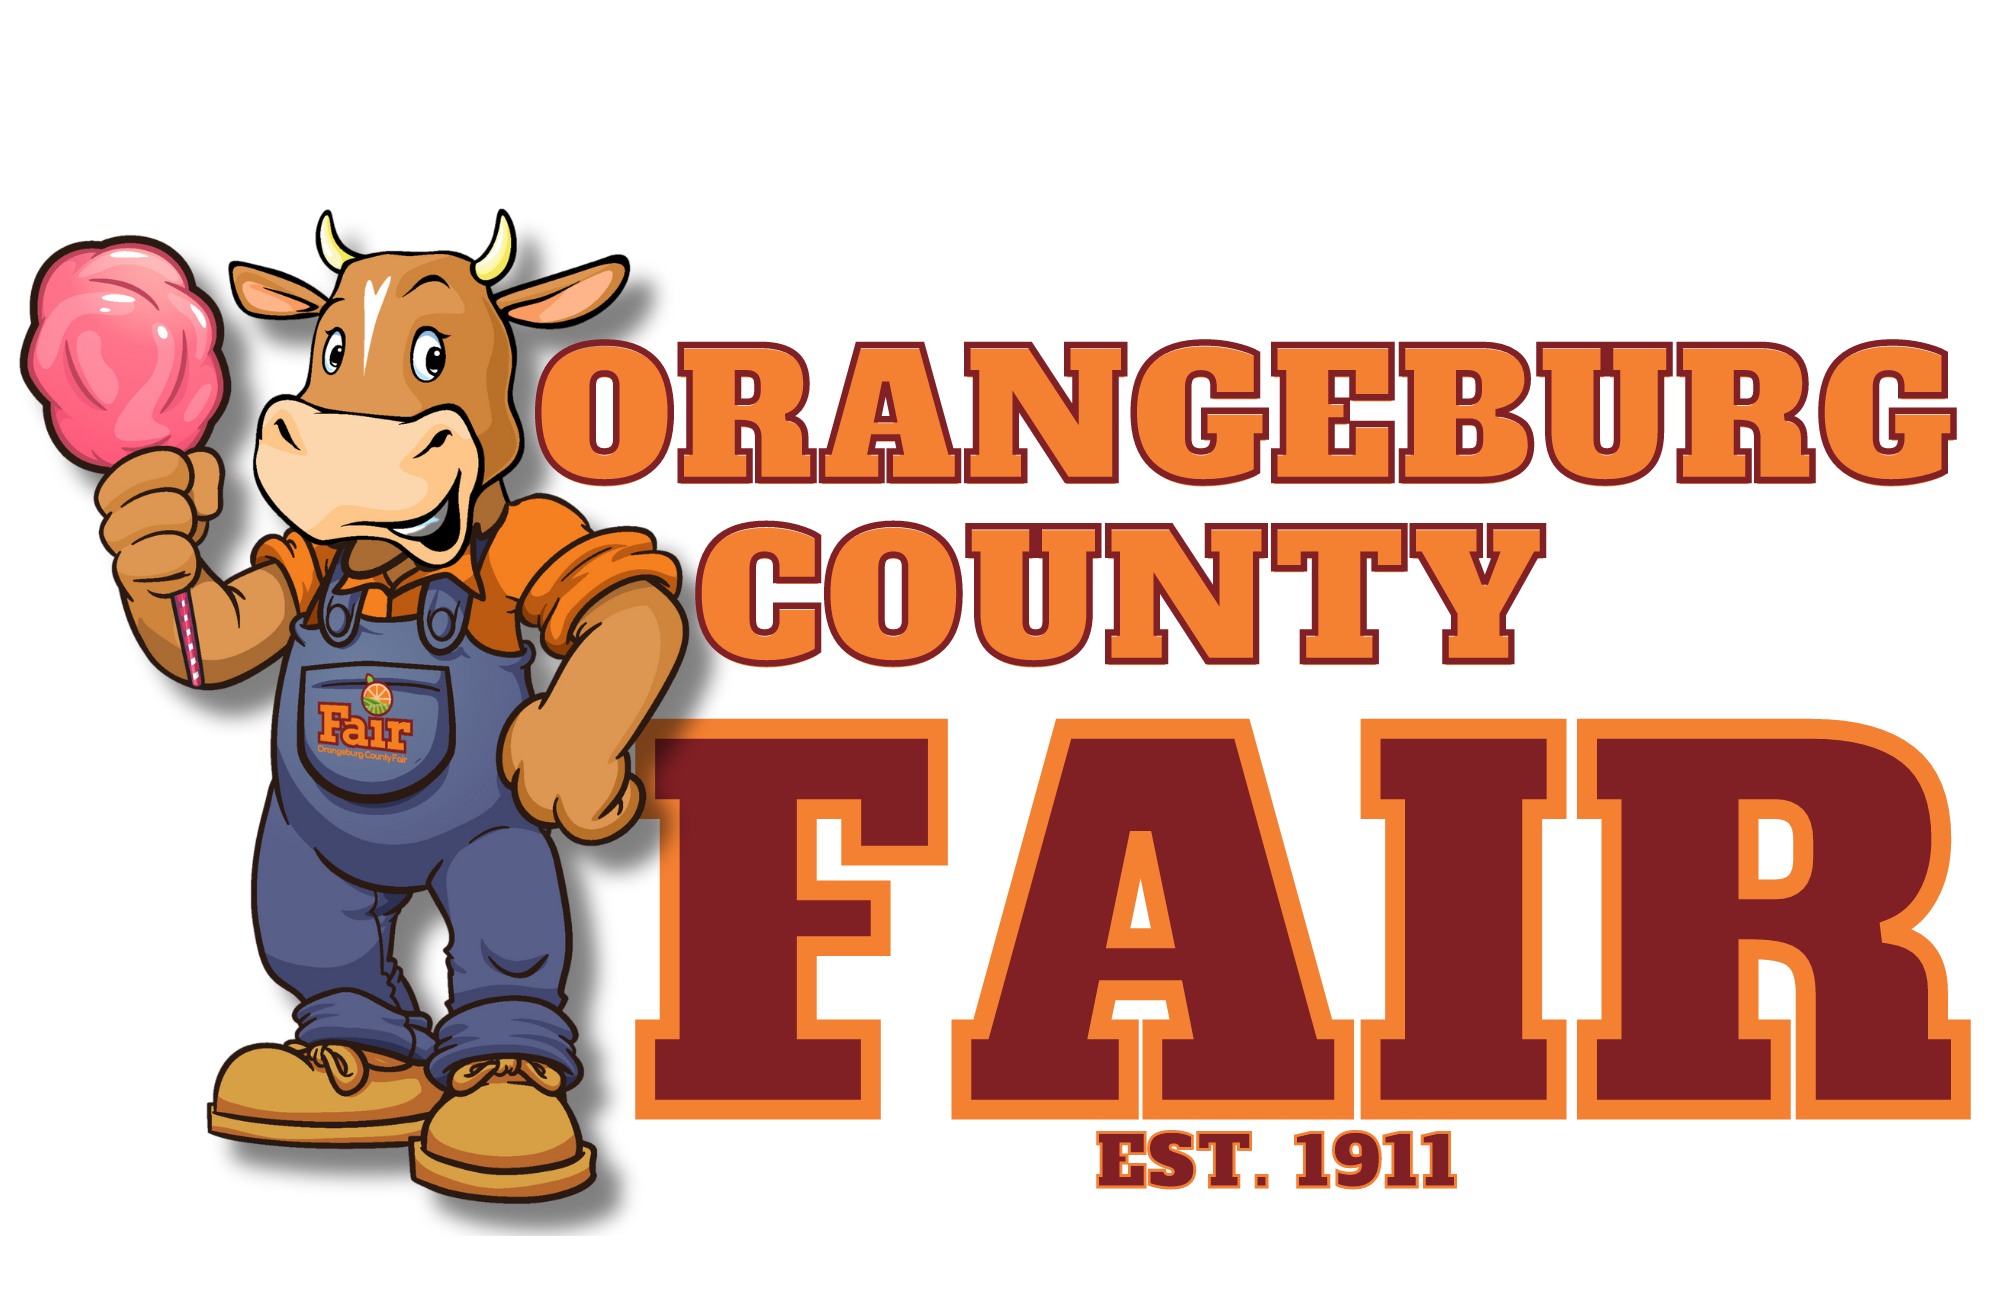 Orangeburg County Fair Association